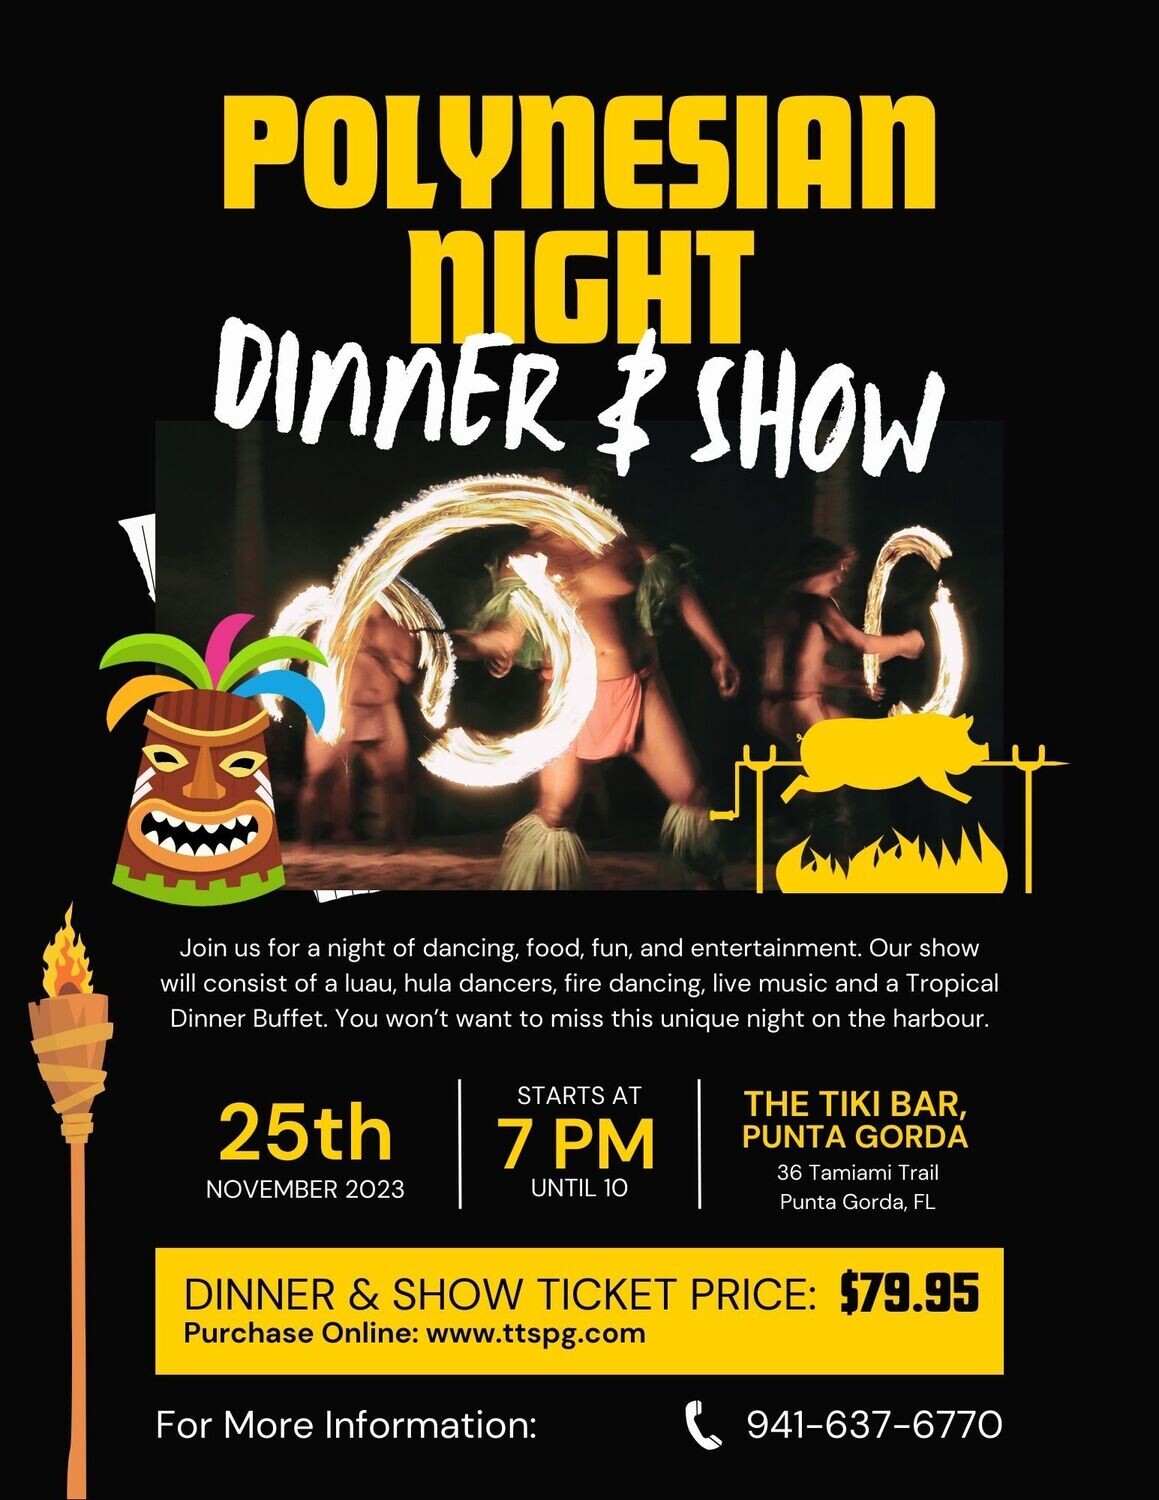 Polynesian Night Dinner & Show Package (November 25th)